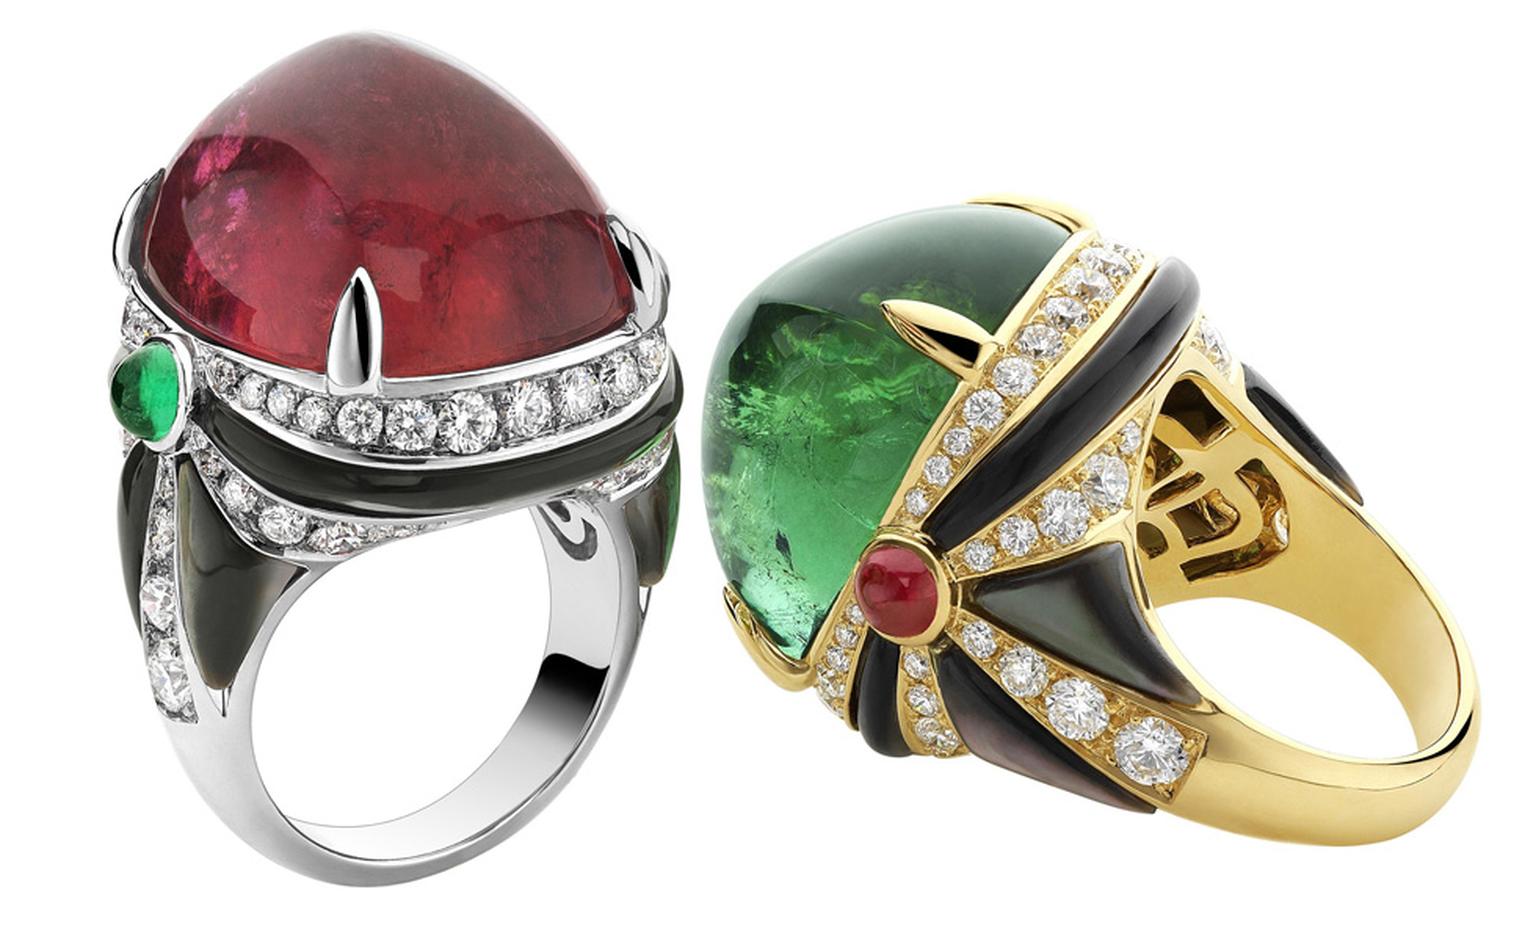 Jewelry News Network: Bulgari Boosts LVMH Jewelry and Watch Sales